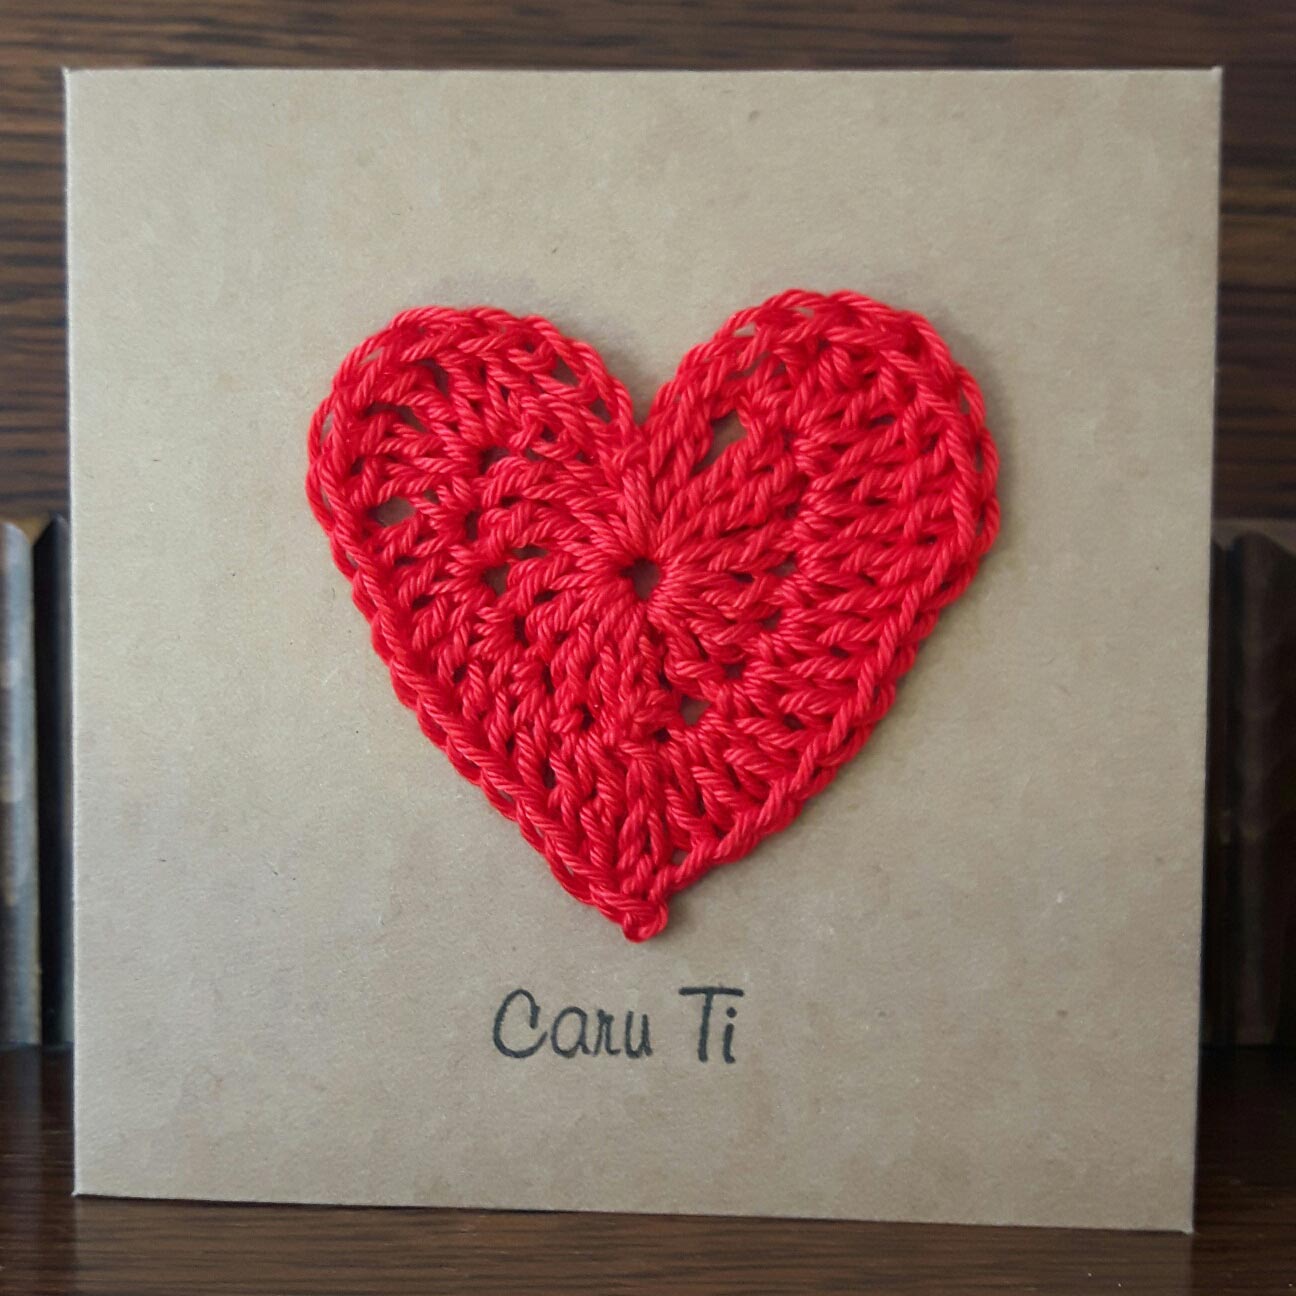 Card - Handmade Crochet Heart - Caru Ti - Love You